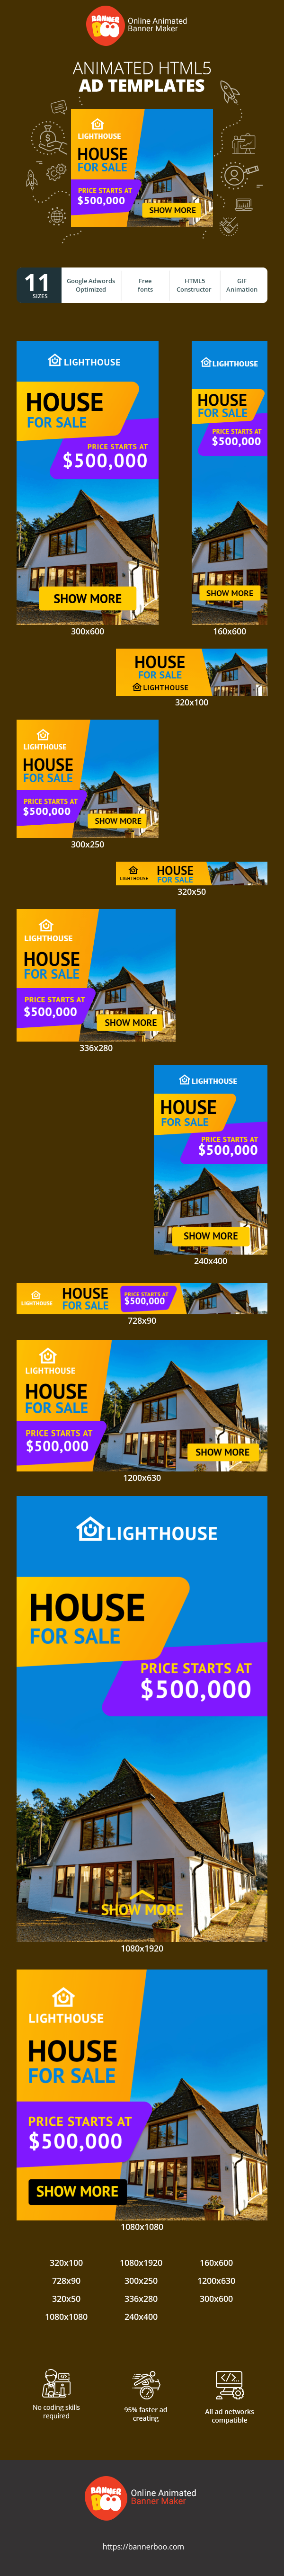 Szablon reklamy banerowej — Home For Sale — Price Starts At $500000